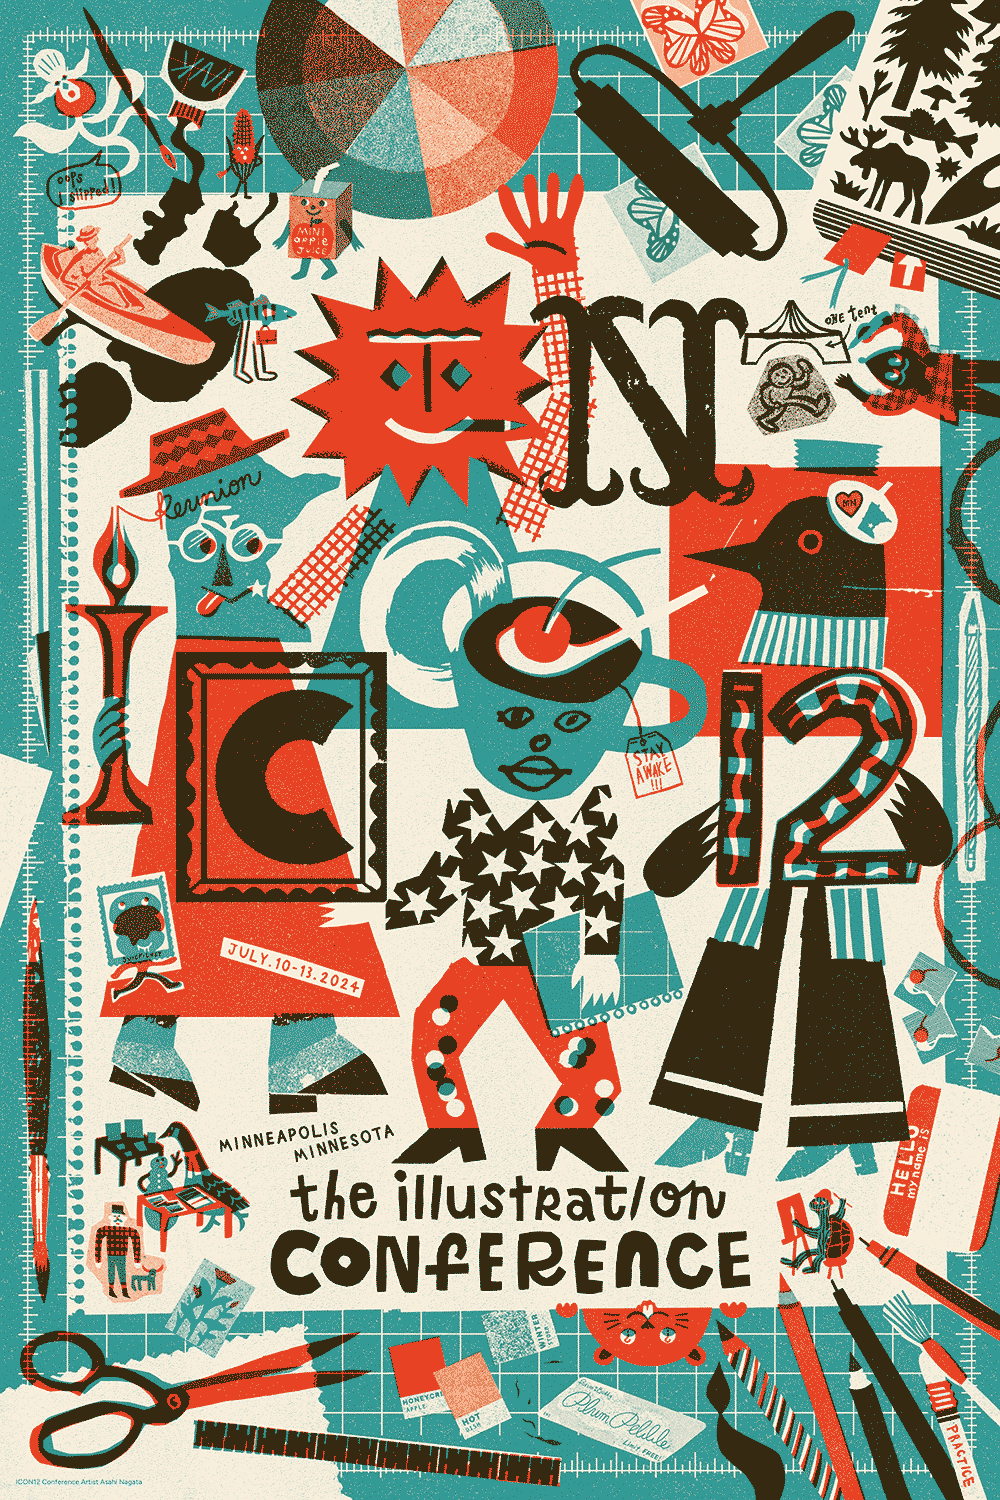 ICON12 Poster Illustration by Asahi Nagata